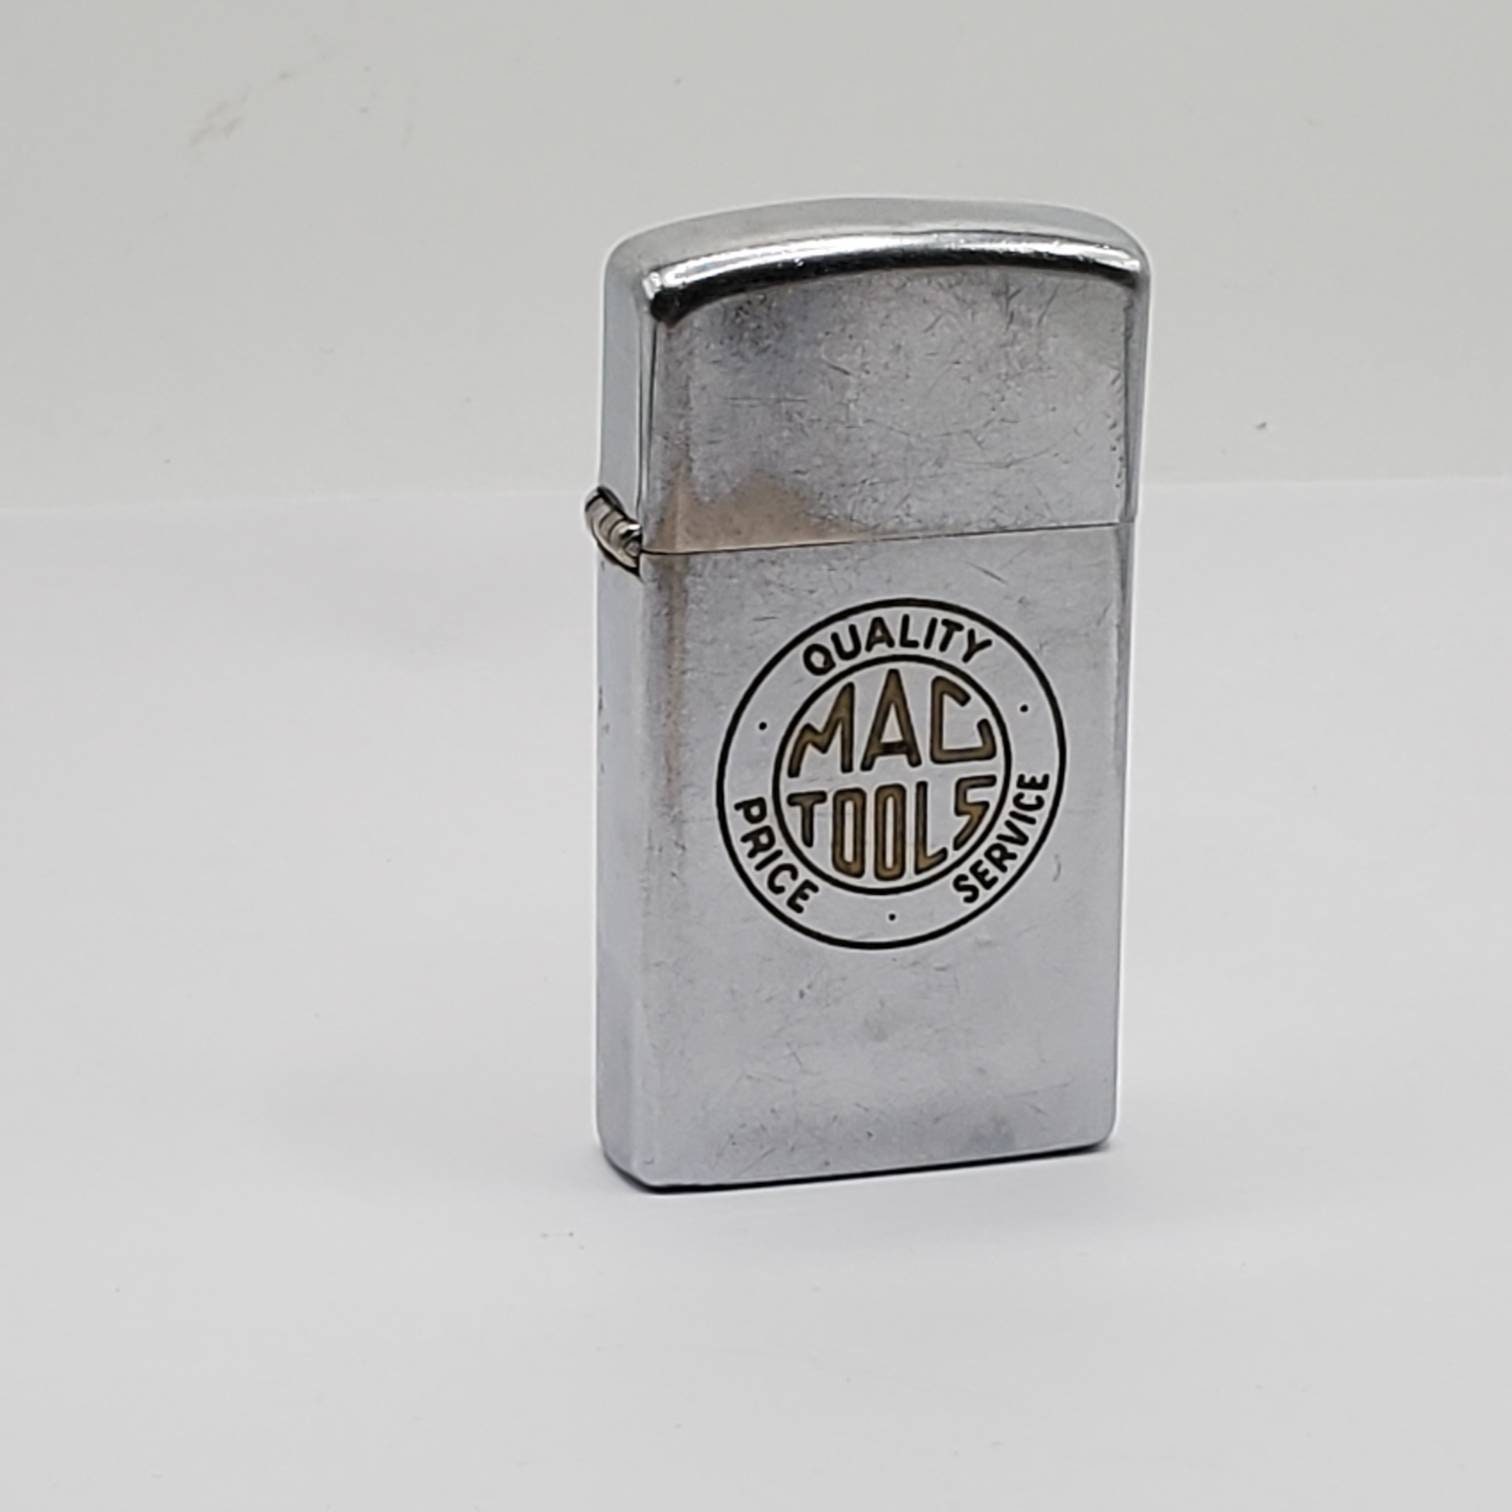 File:Vintage Zippo Cigarette Lighter, Original Price = 7.75 USD  (11406286243).jpg - Wikimedia Commons